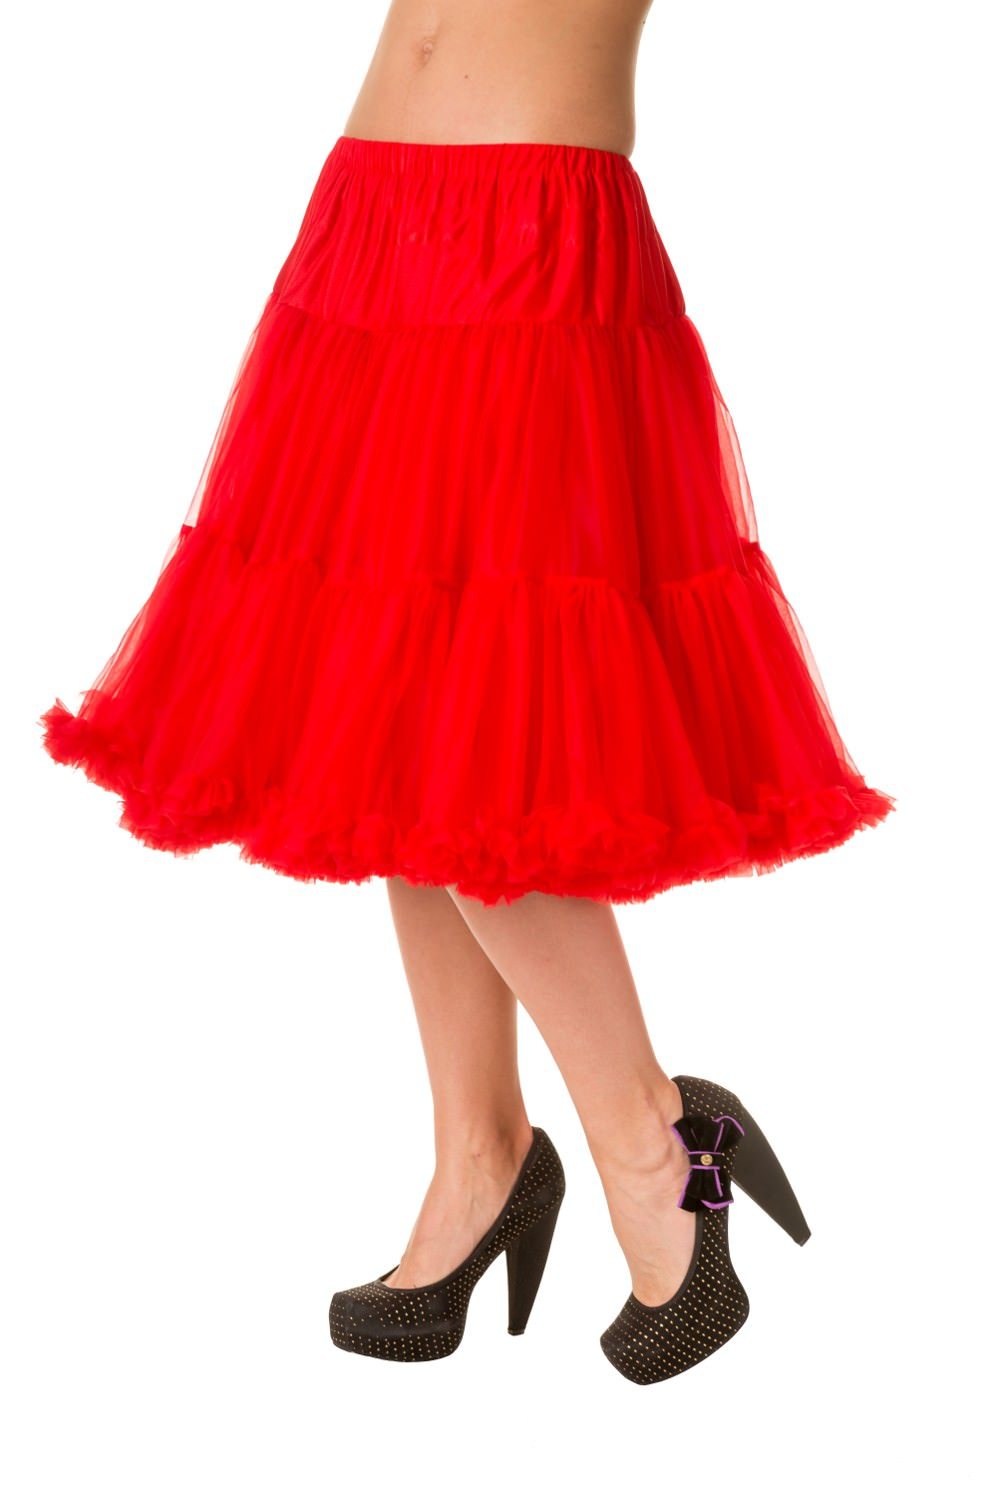 Banned SBN235 Starlite Petticoat Red - Nichole Jade Rockabilly Boutique